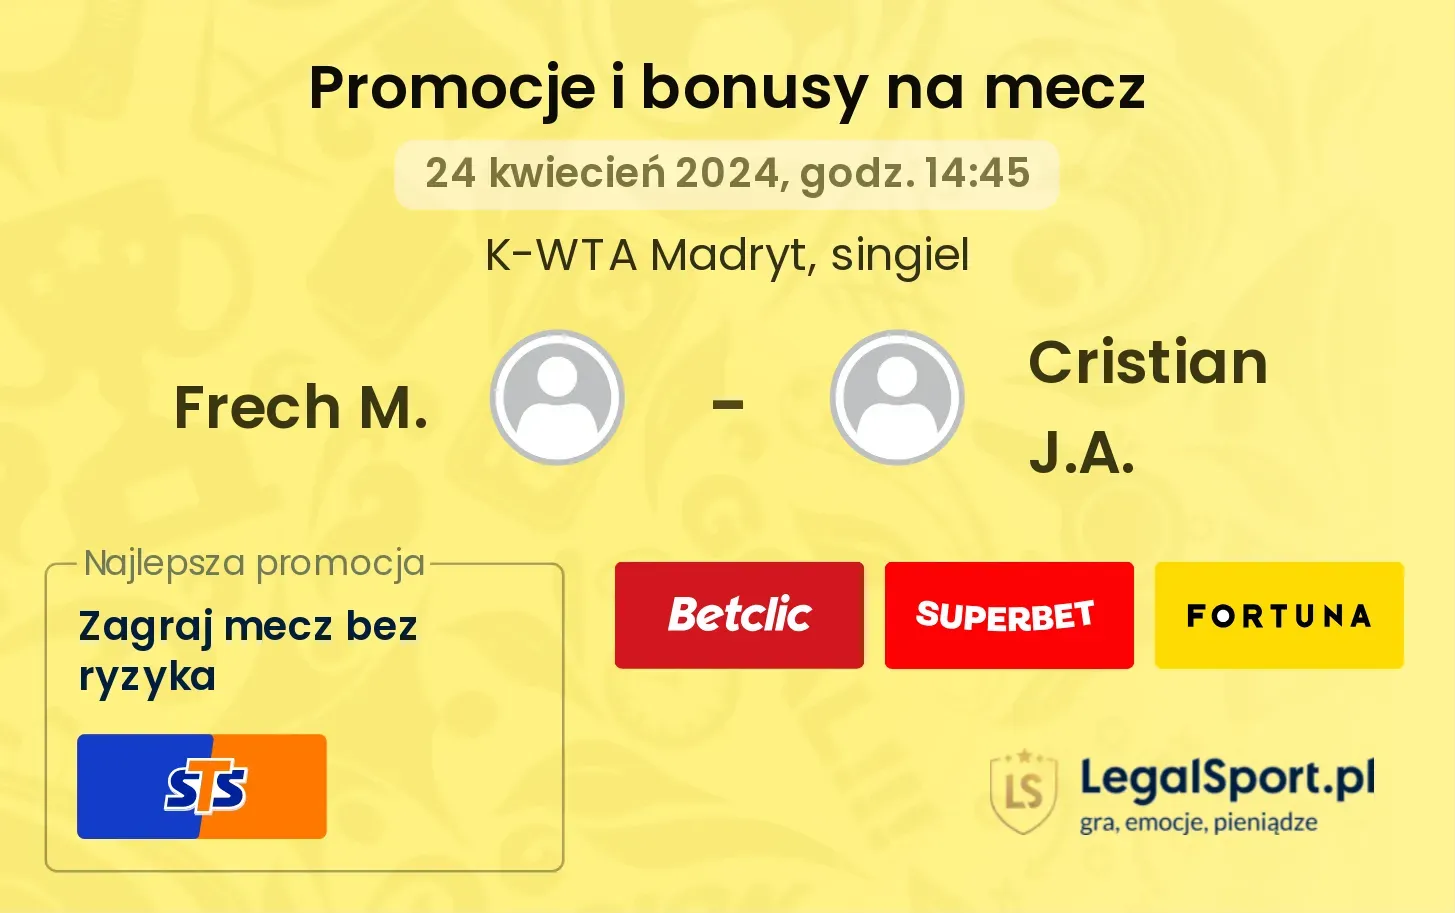 Frech M. - Cristian J.A. promocje bonusy na mecz